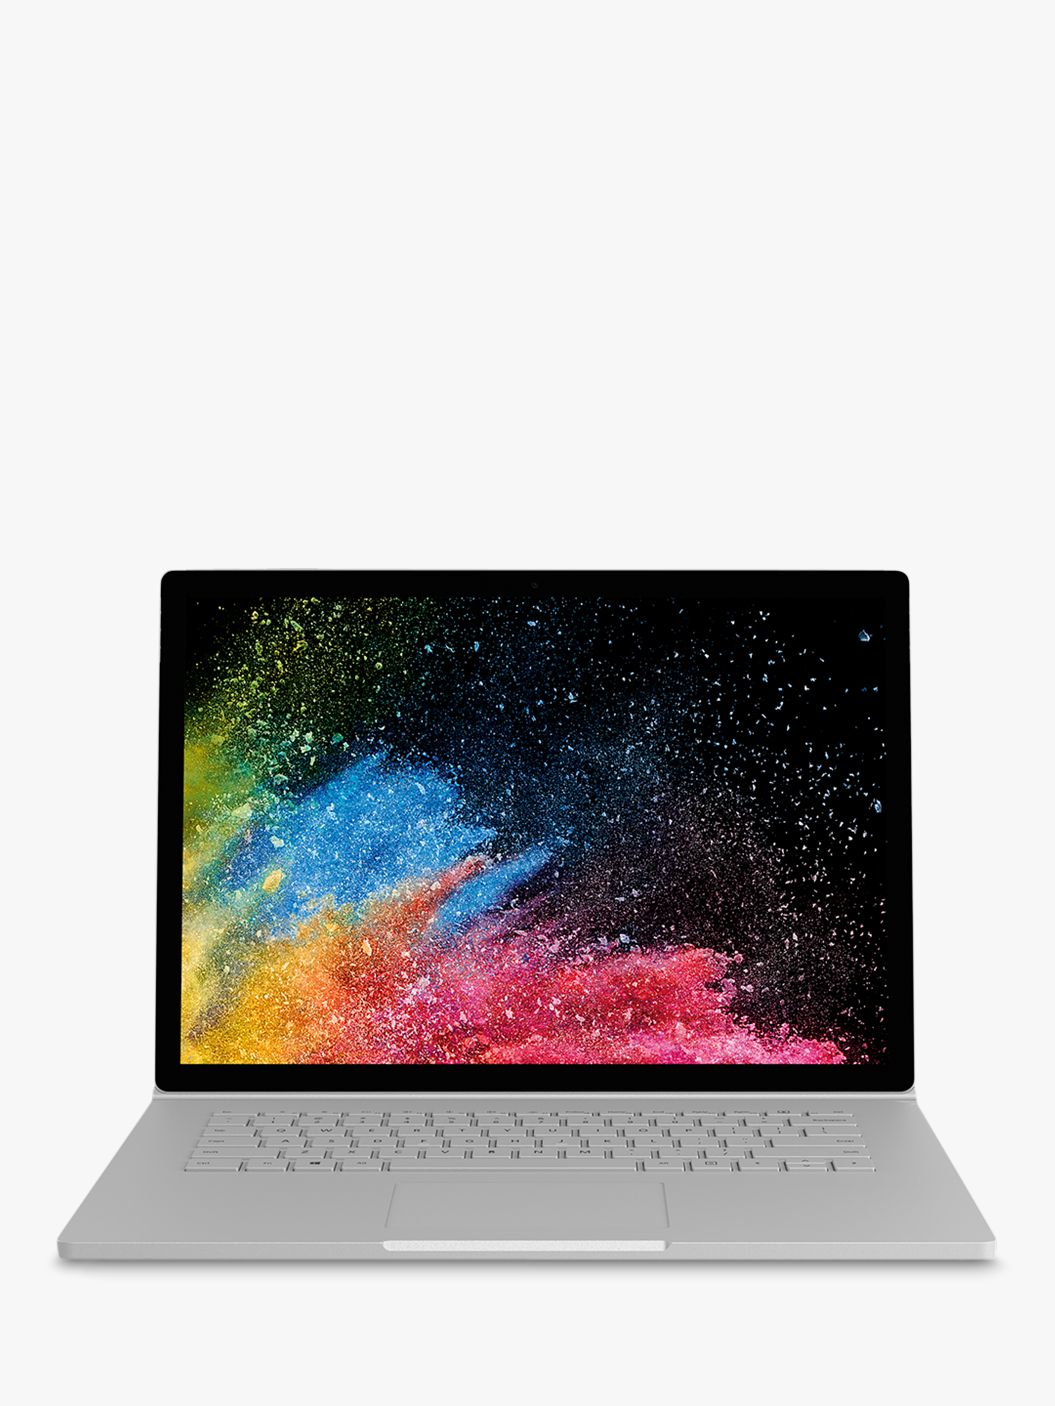 Microsoft Surface Book 2, Intel Core i7, 16GB RAM, 512GB SSD, 15”, PixelSense Display, GeForce GTX 1060, Silver